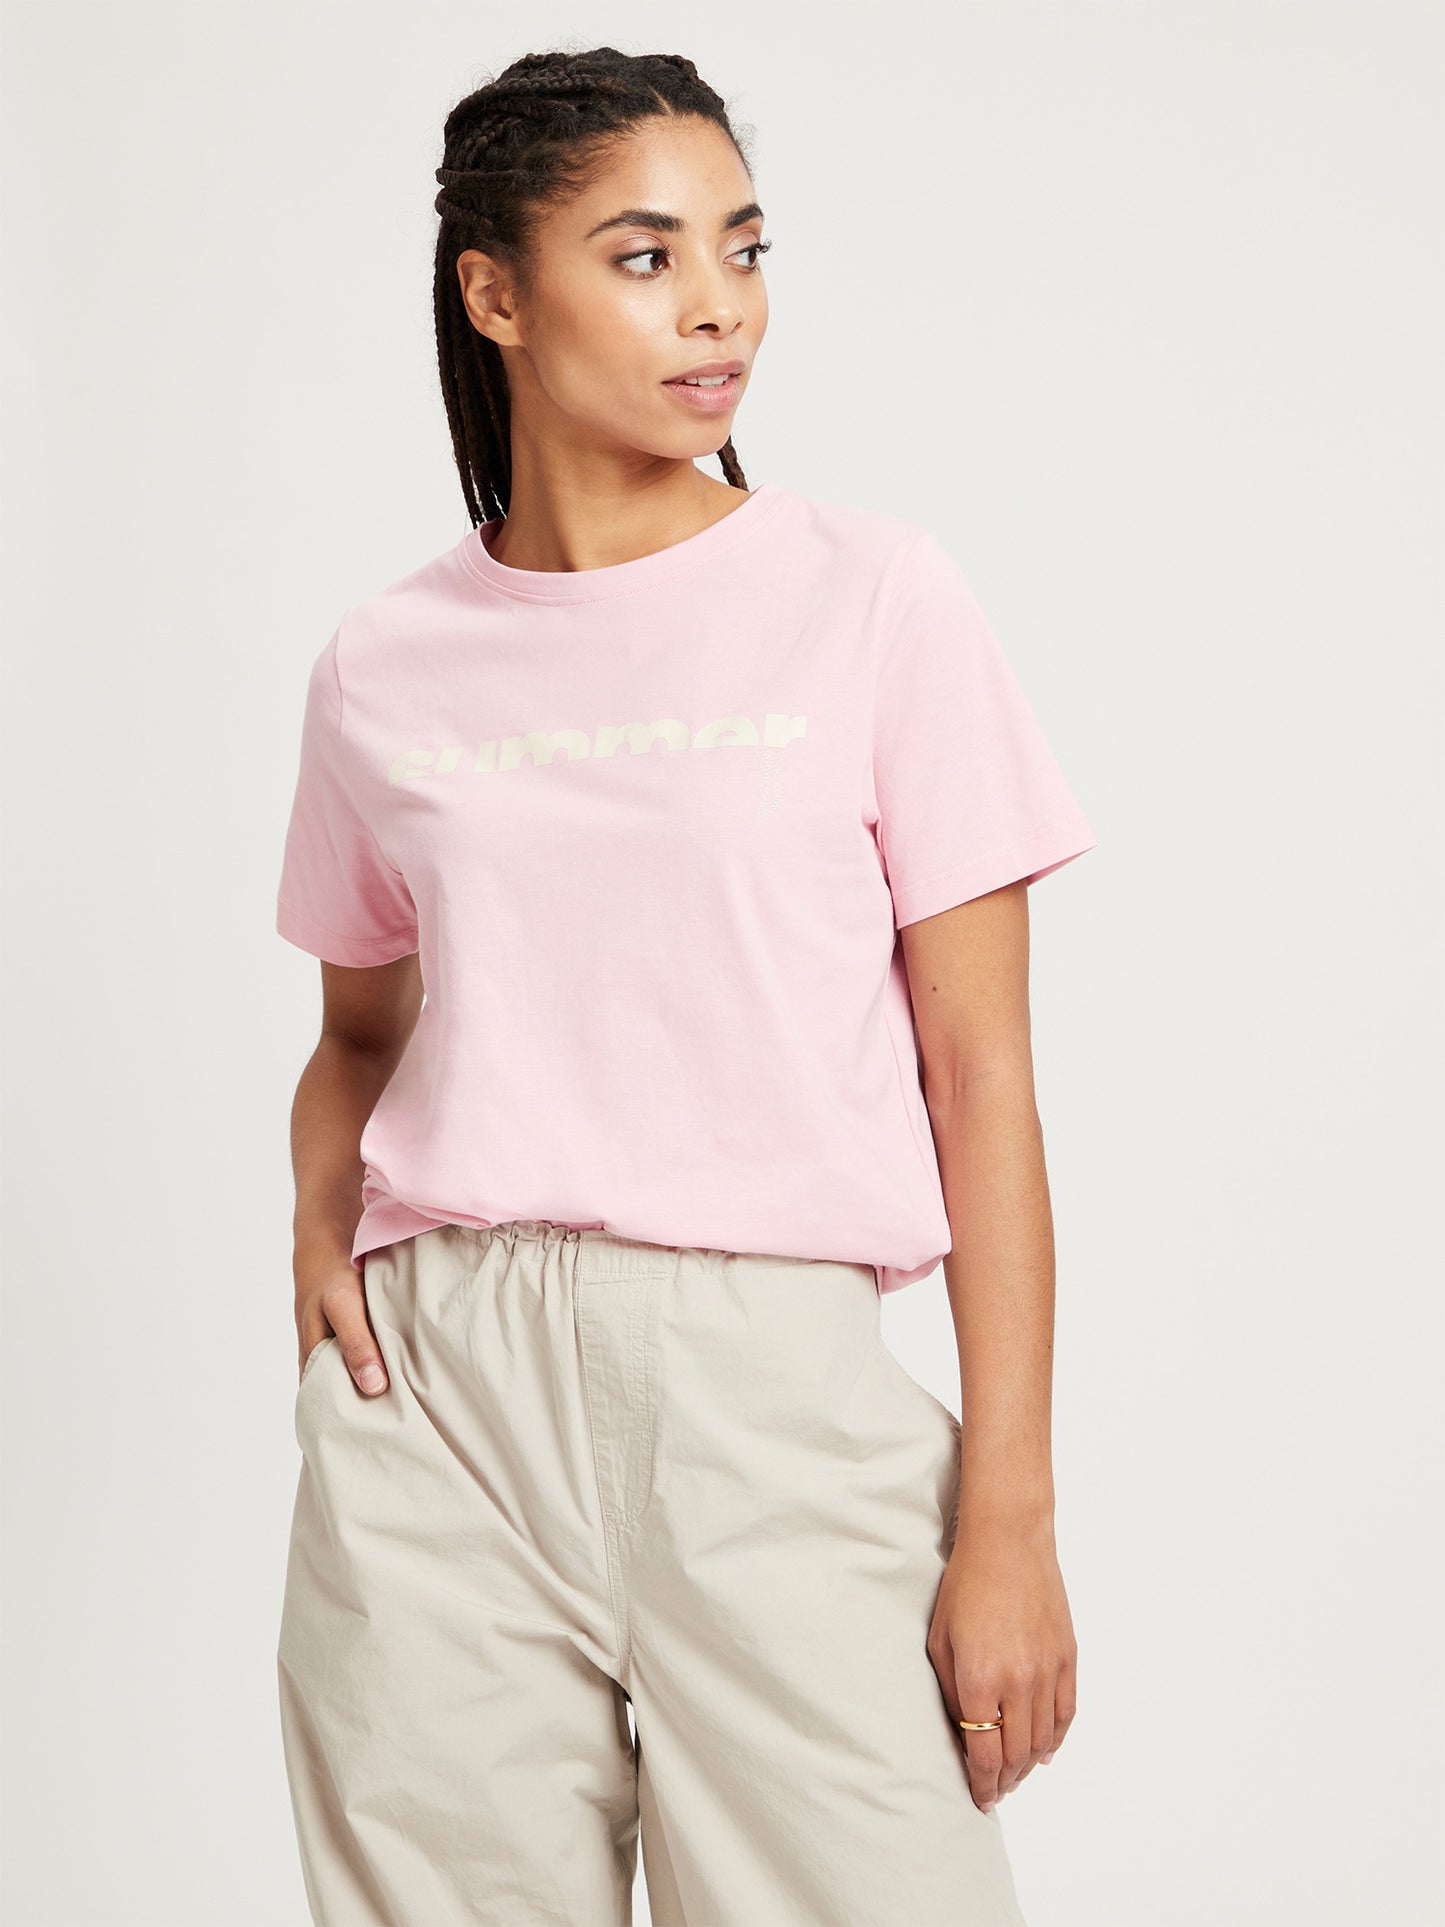 Women's regular T-shirt with slogan print pink.